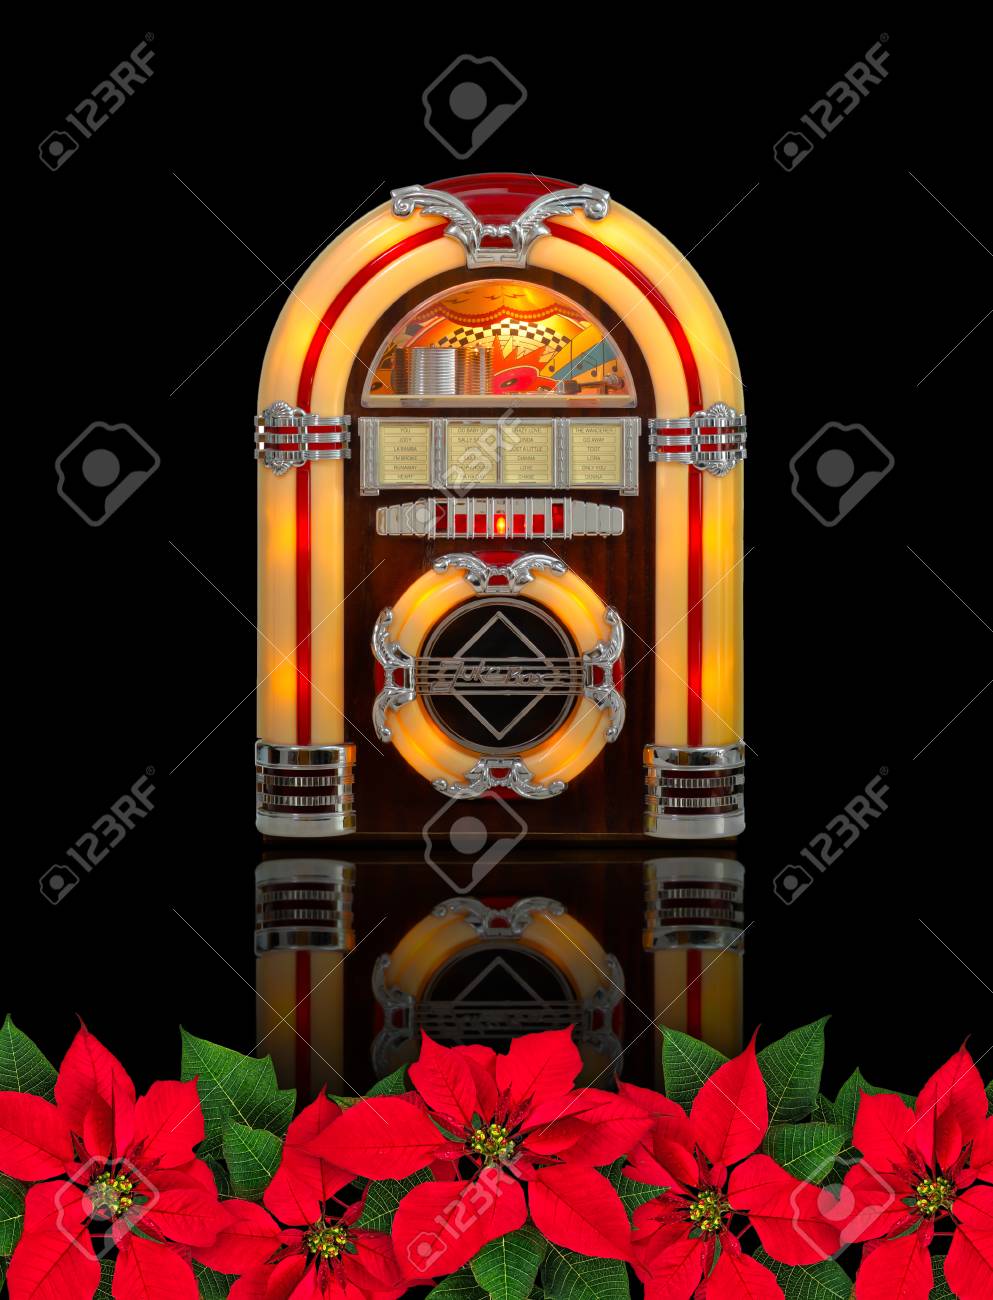 Retro Juke Box Radio With Red Poinsettia Flower Christmas Ornament